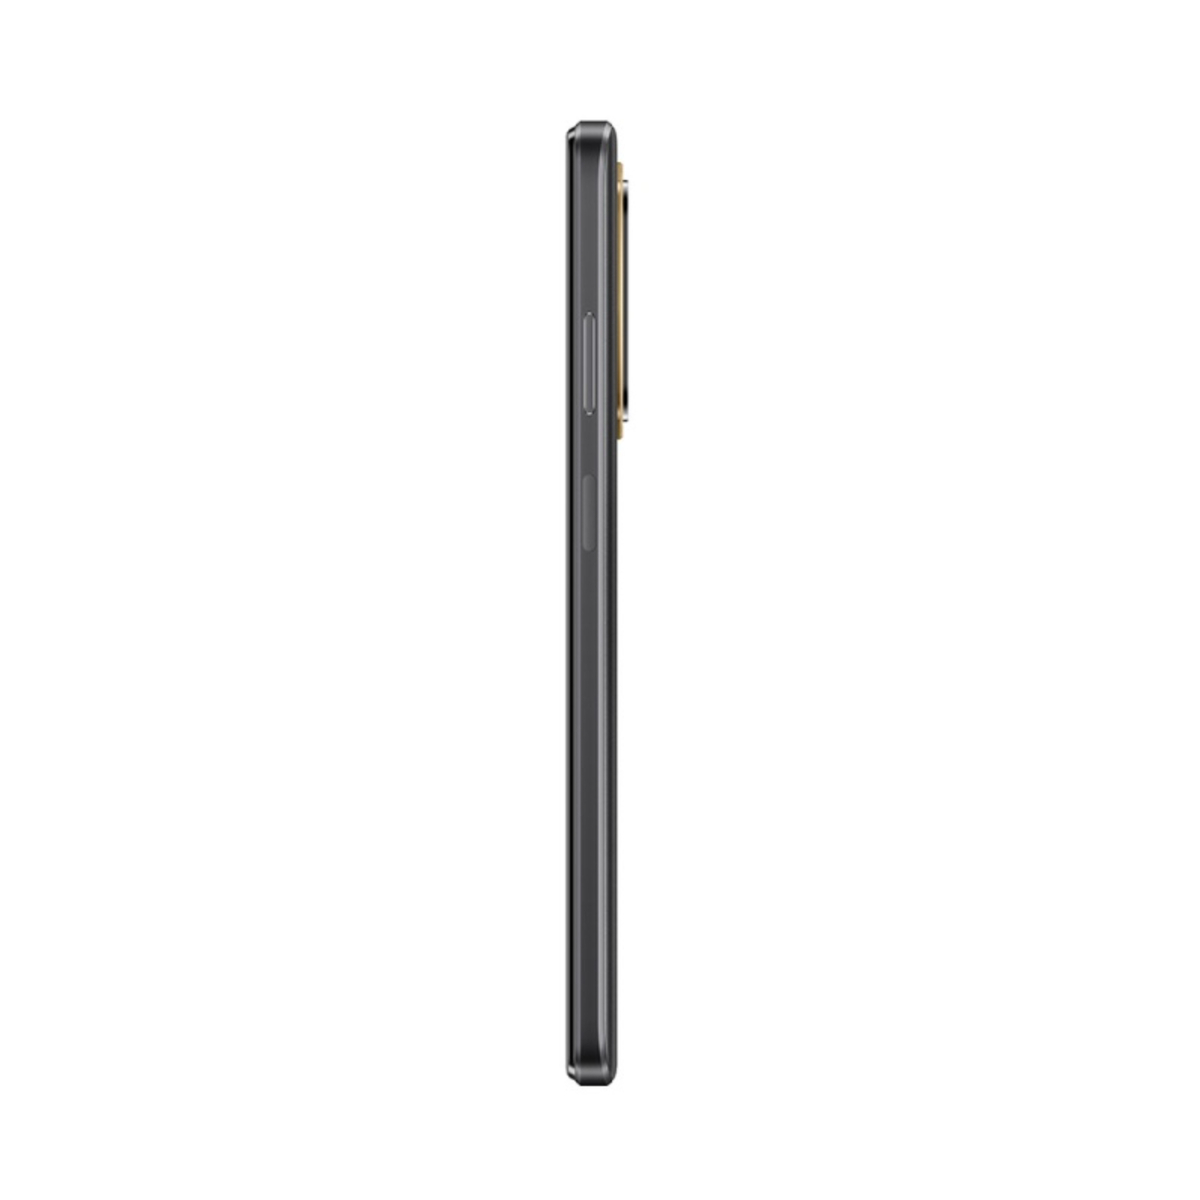 Huawei Nova Y91 Dual SIM 4G Smartphone, 8 GB RAM, 256 GB Storage, Starry Black